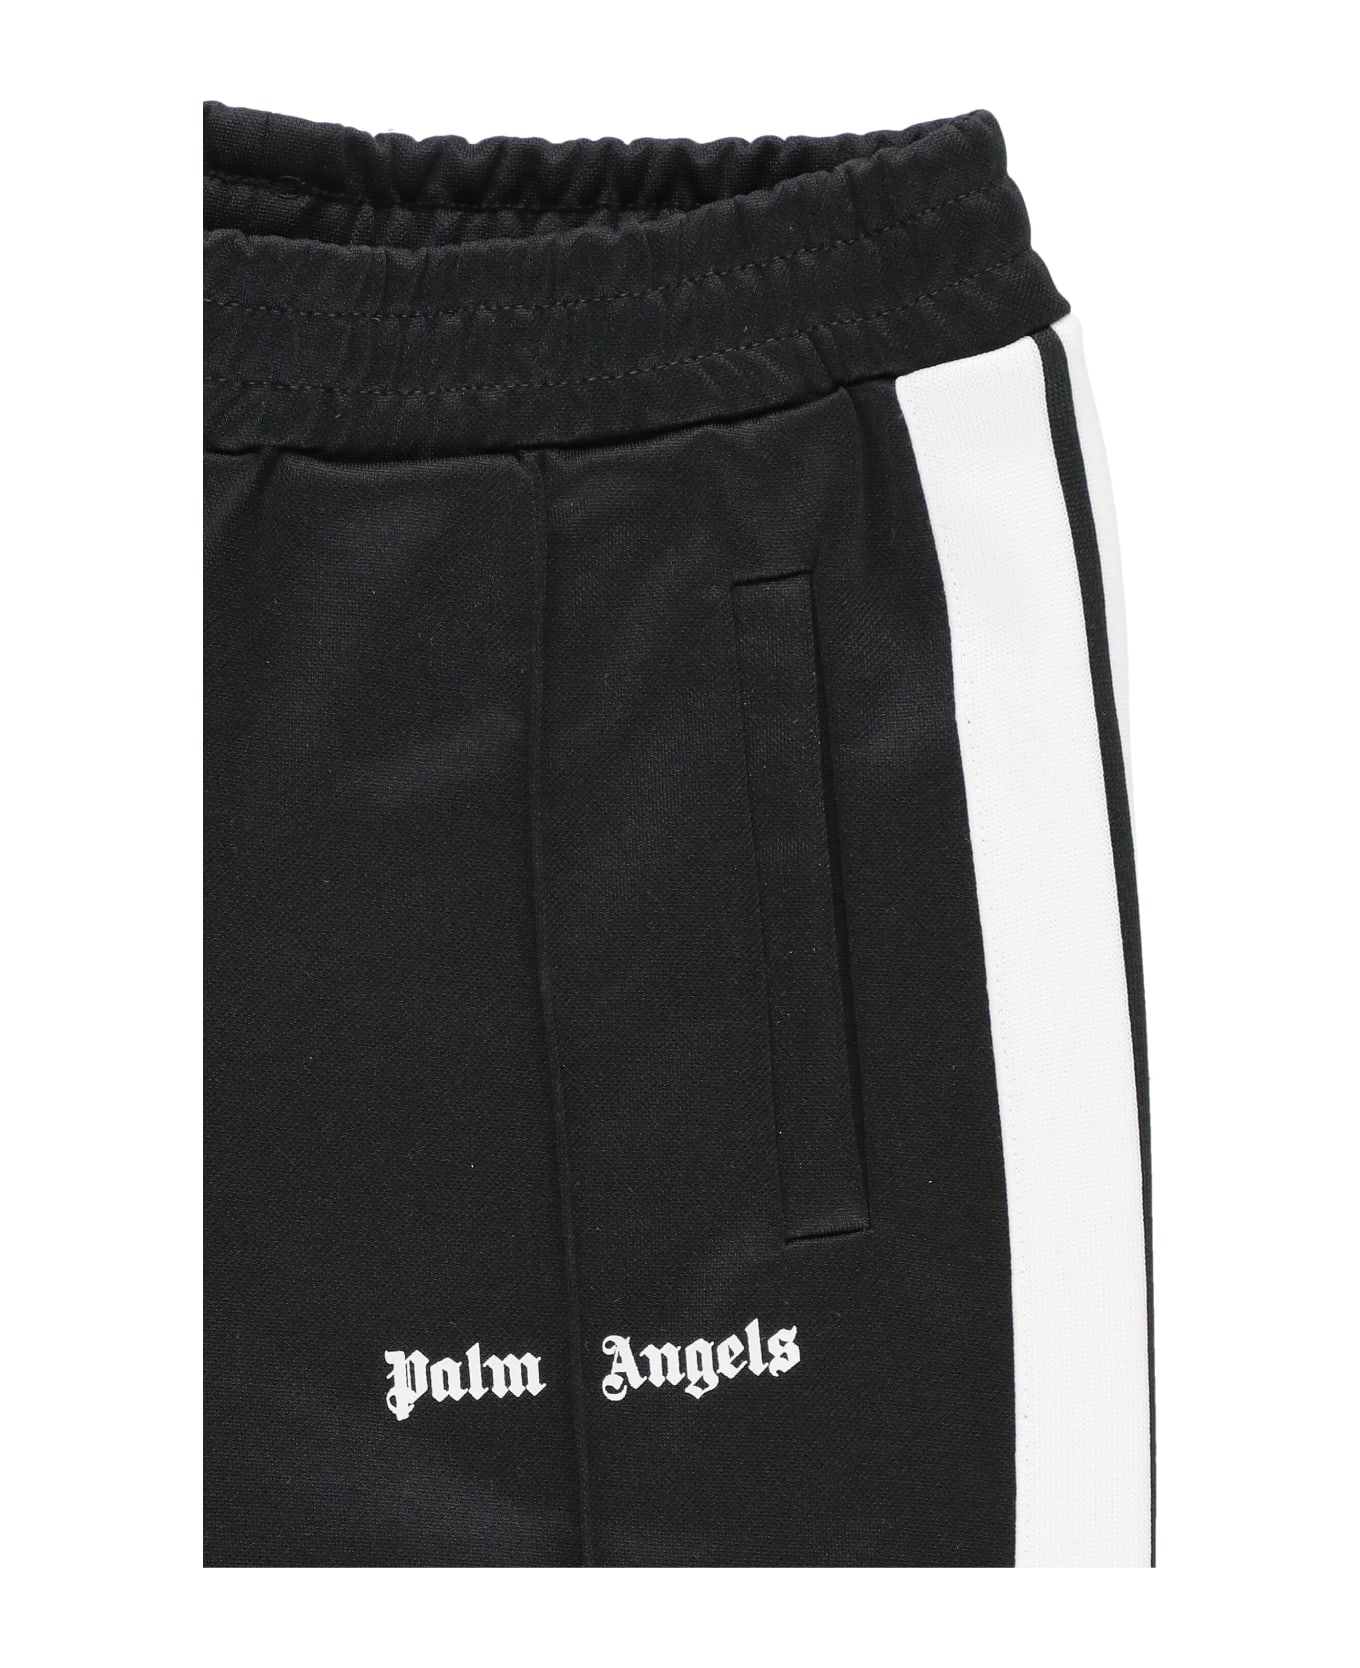 Palm Angels Sweatpants With Logo - Black ボトムス